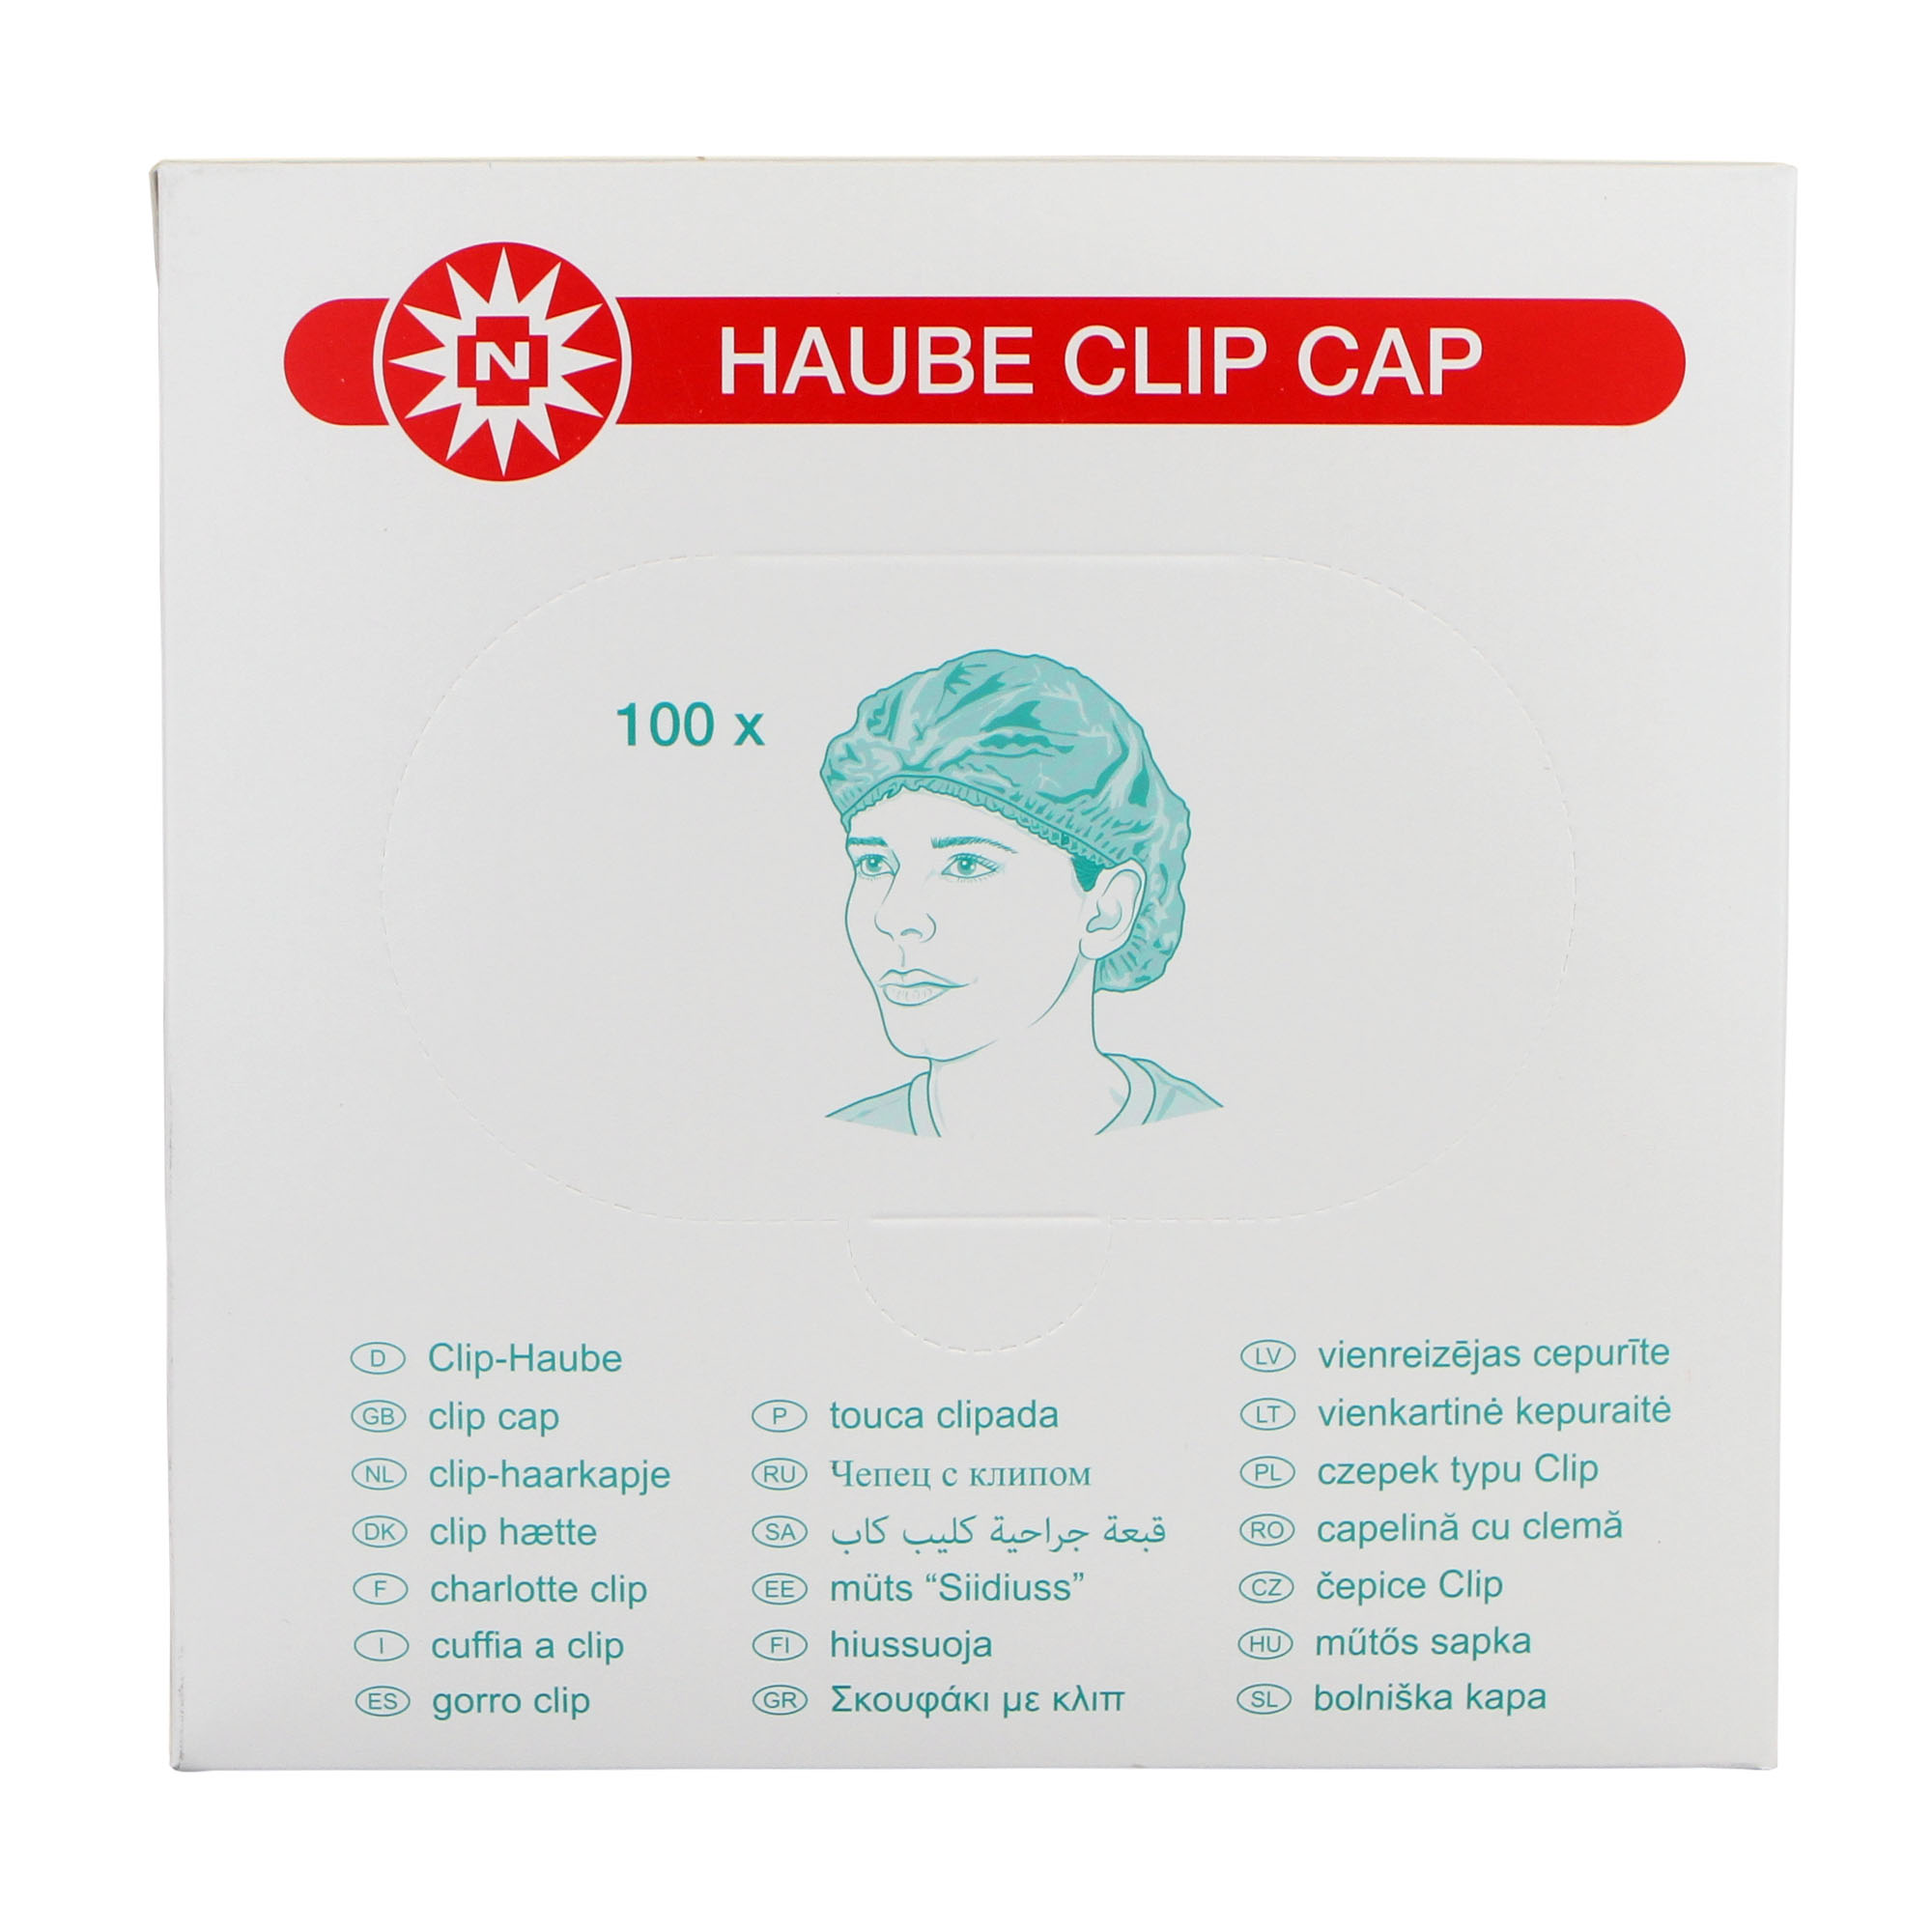 nobamed_haube_clip_cap.jpg